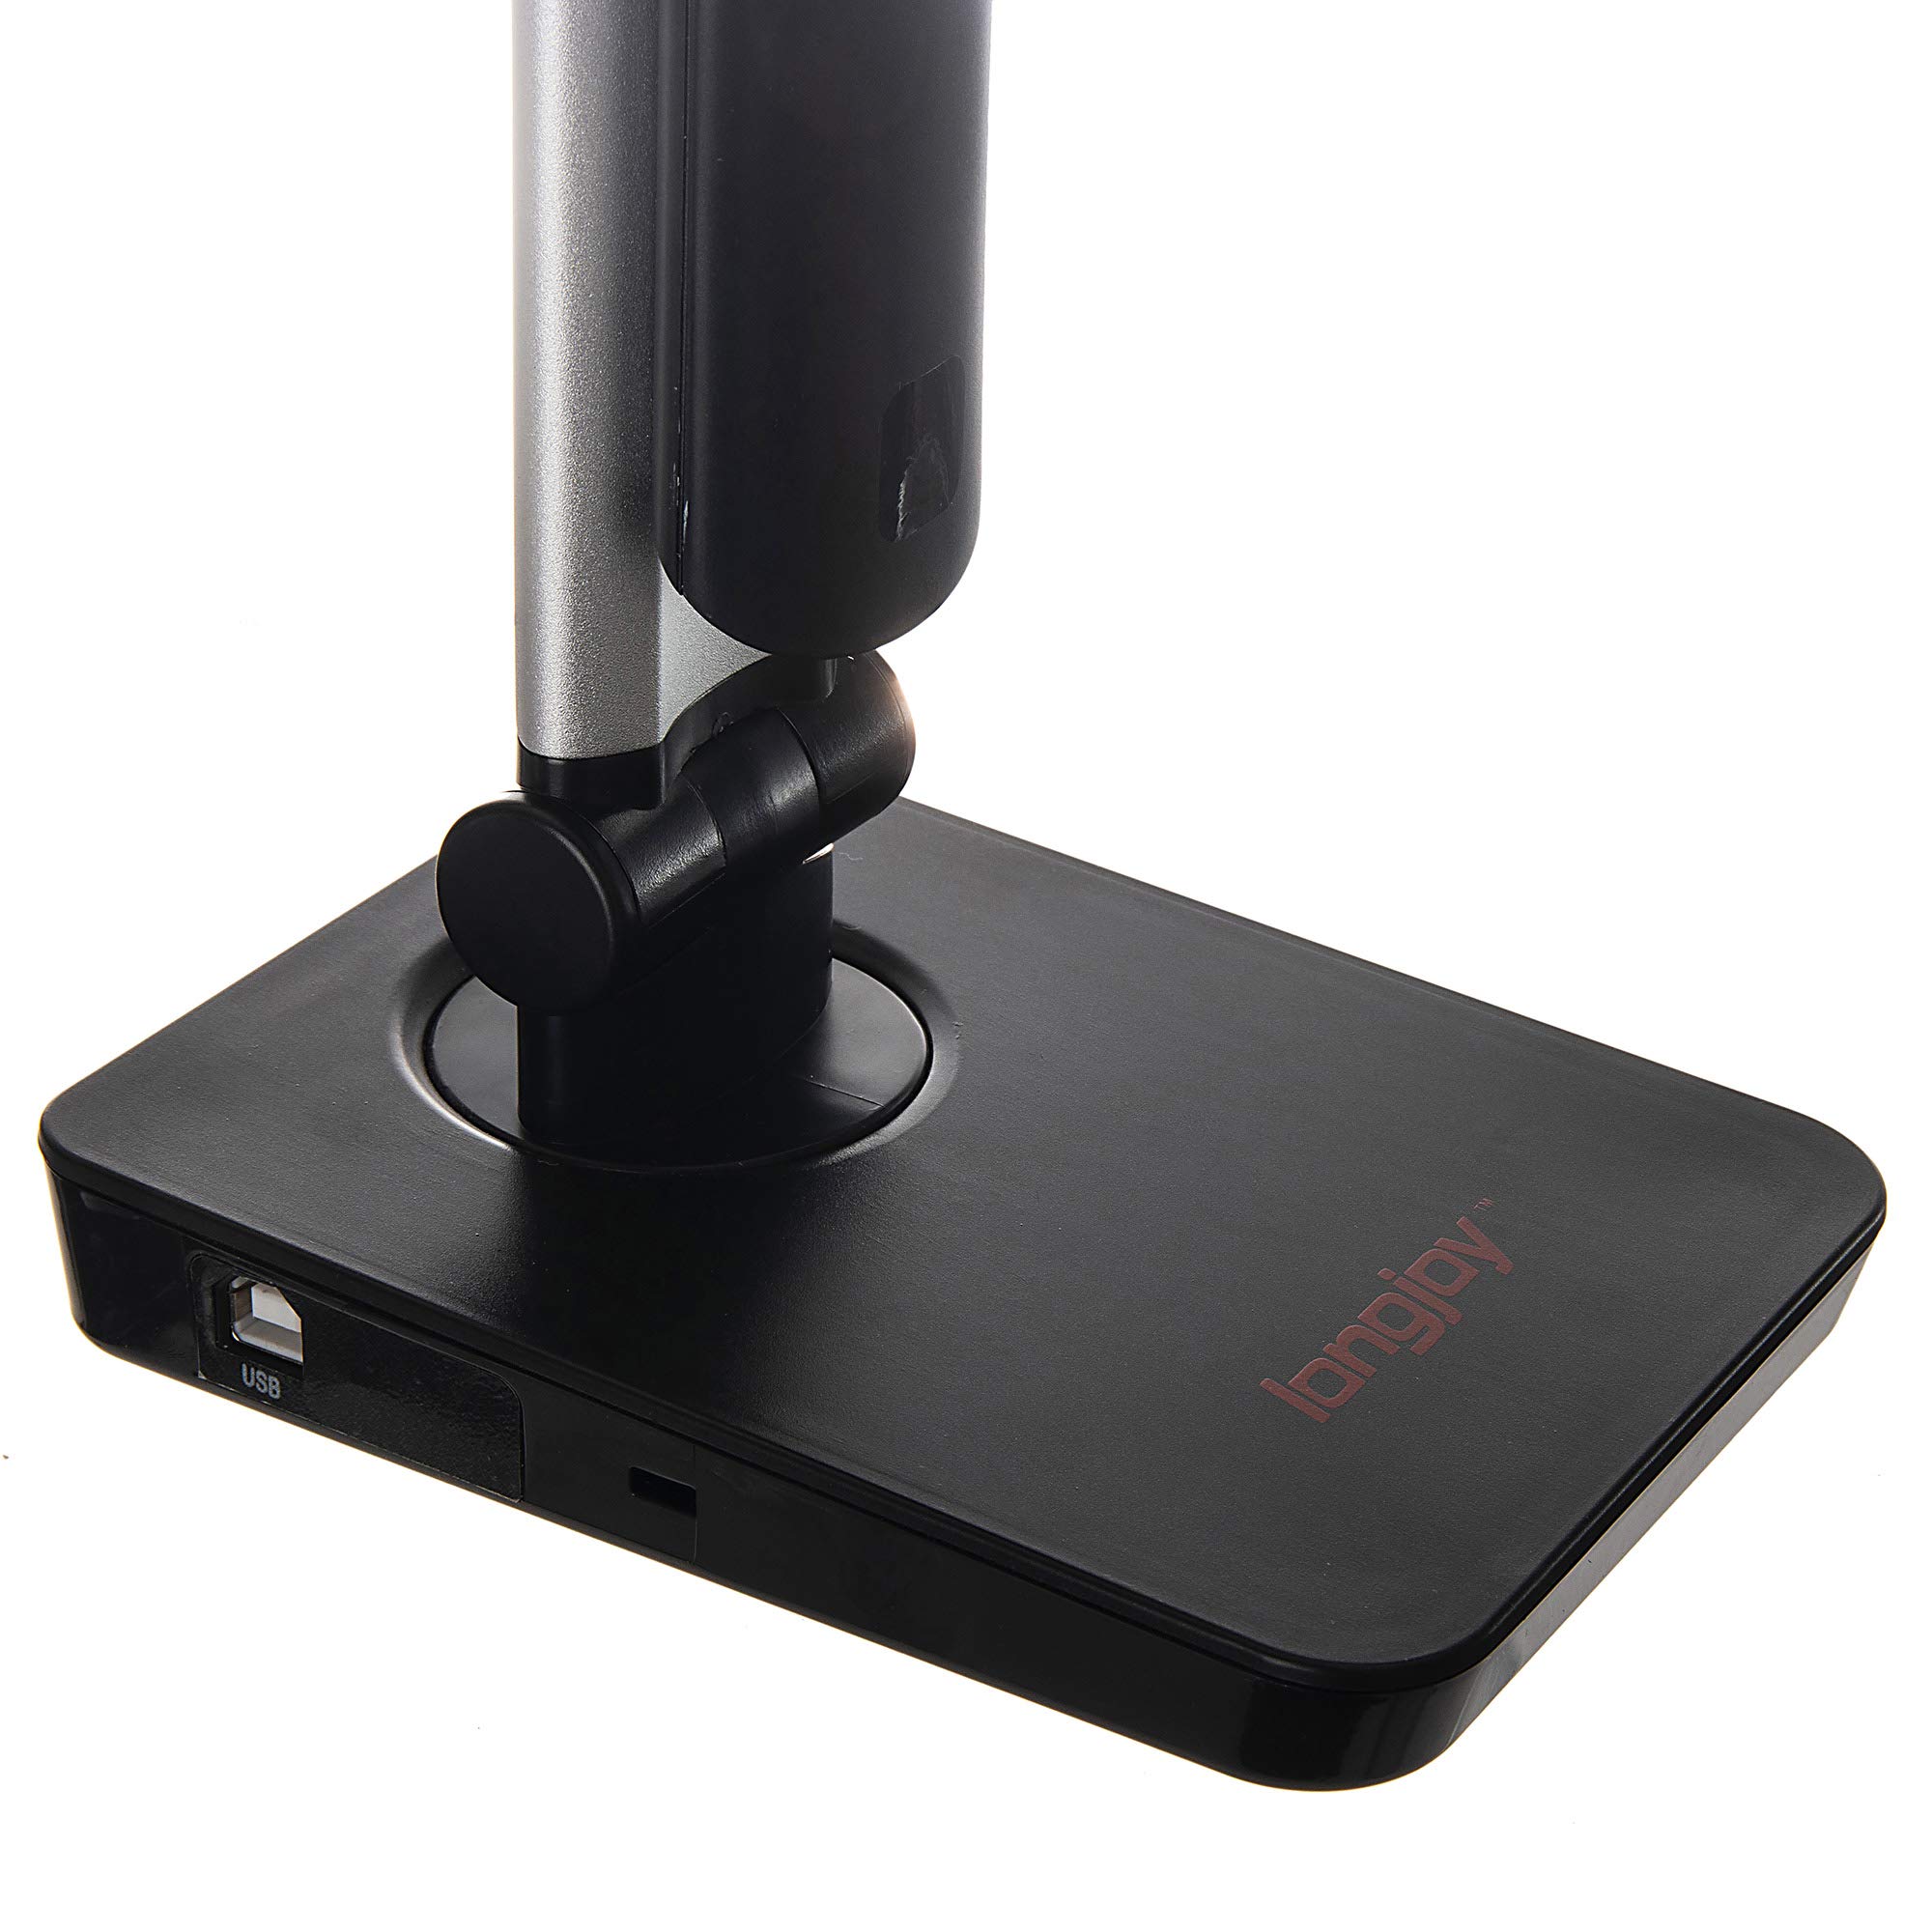 Longjoy Digital Portable Rotatable for All Dimension USB Document Camera LV-1 Series LV-1020(Black)